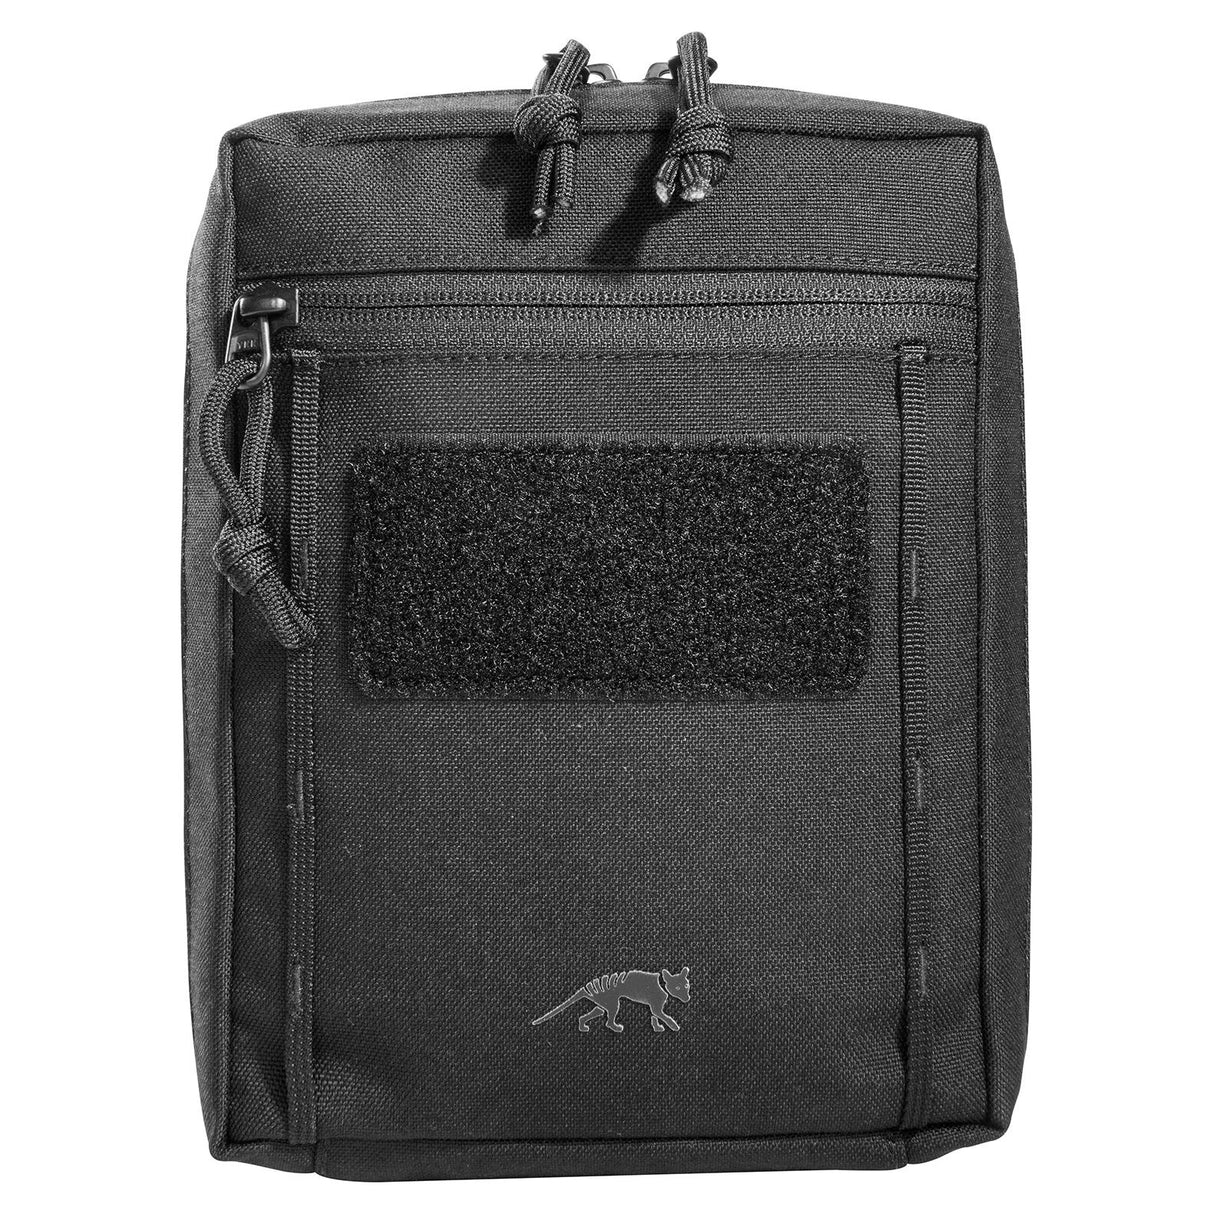 Tasmanian Tiger Tac Pouch 6.1 IRR accessory pouch